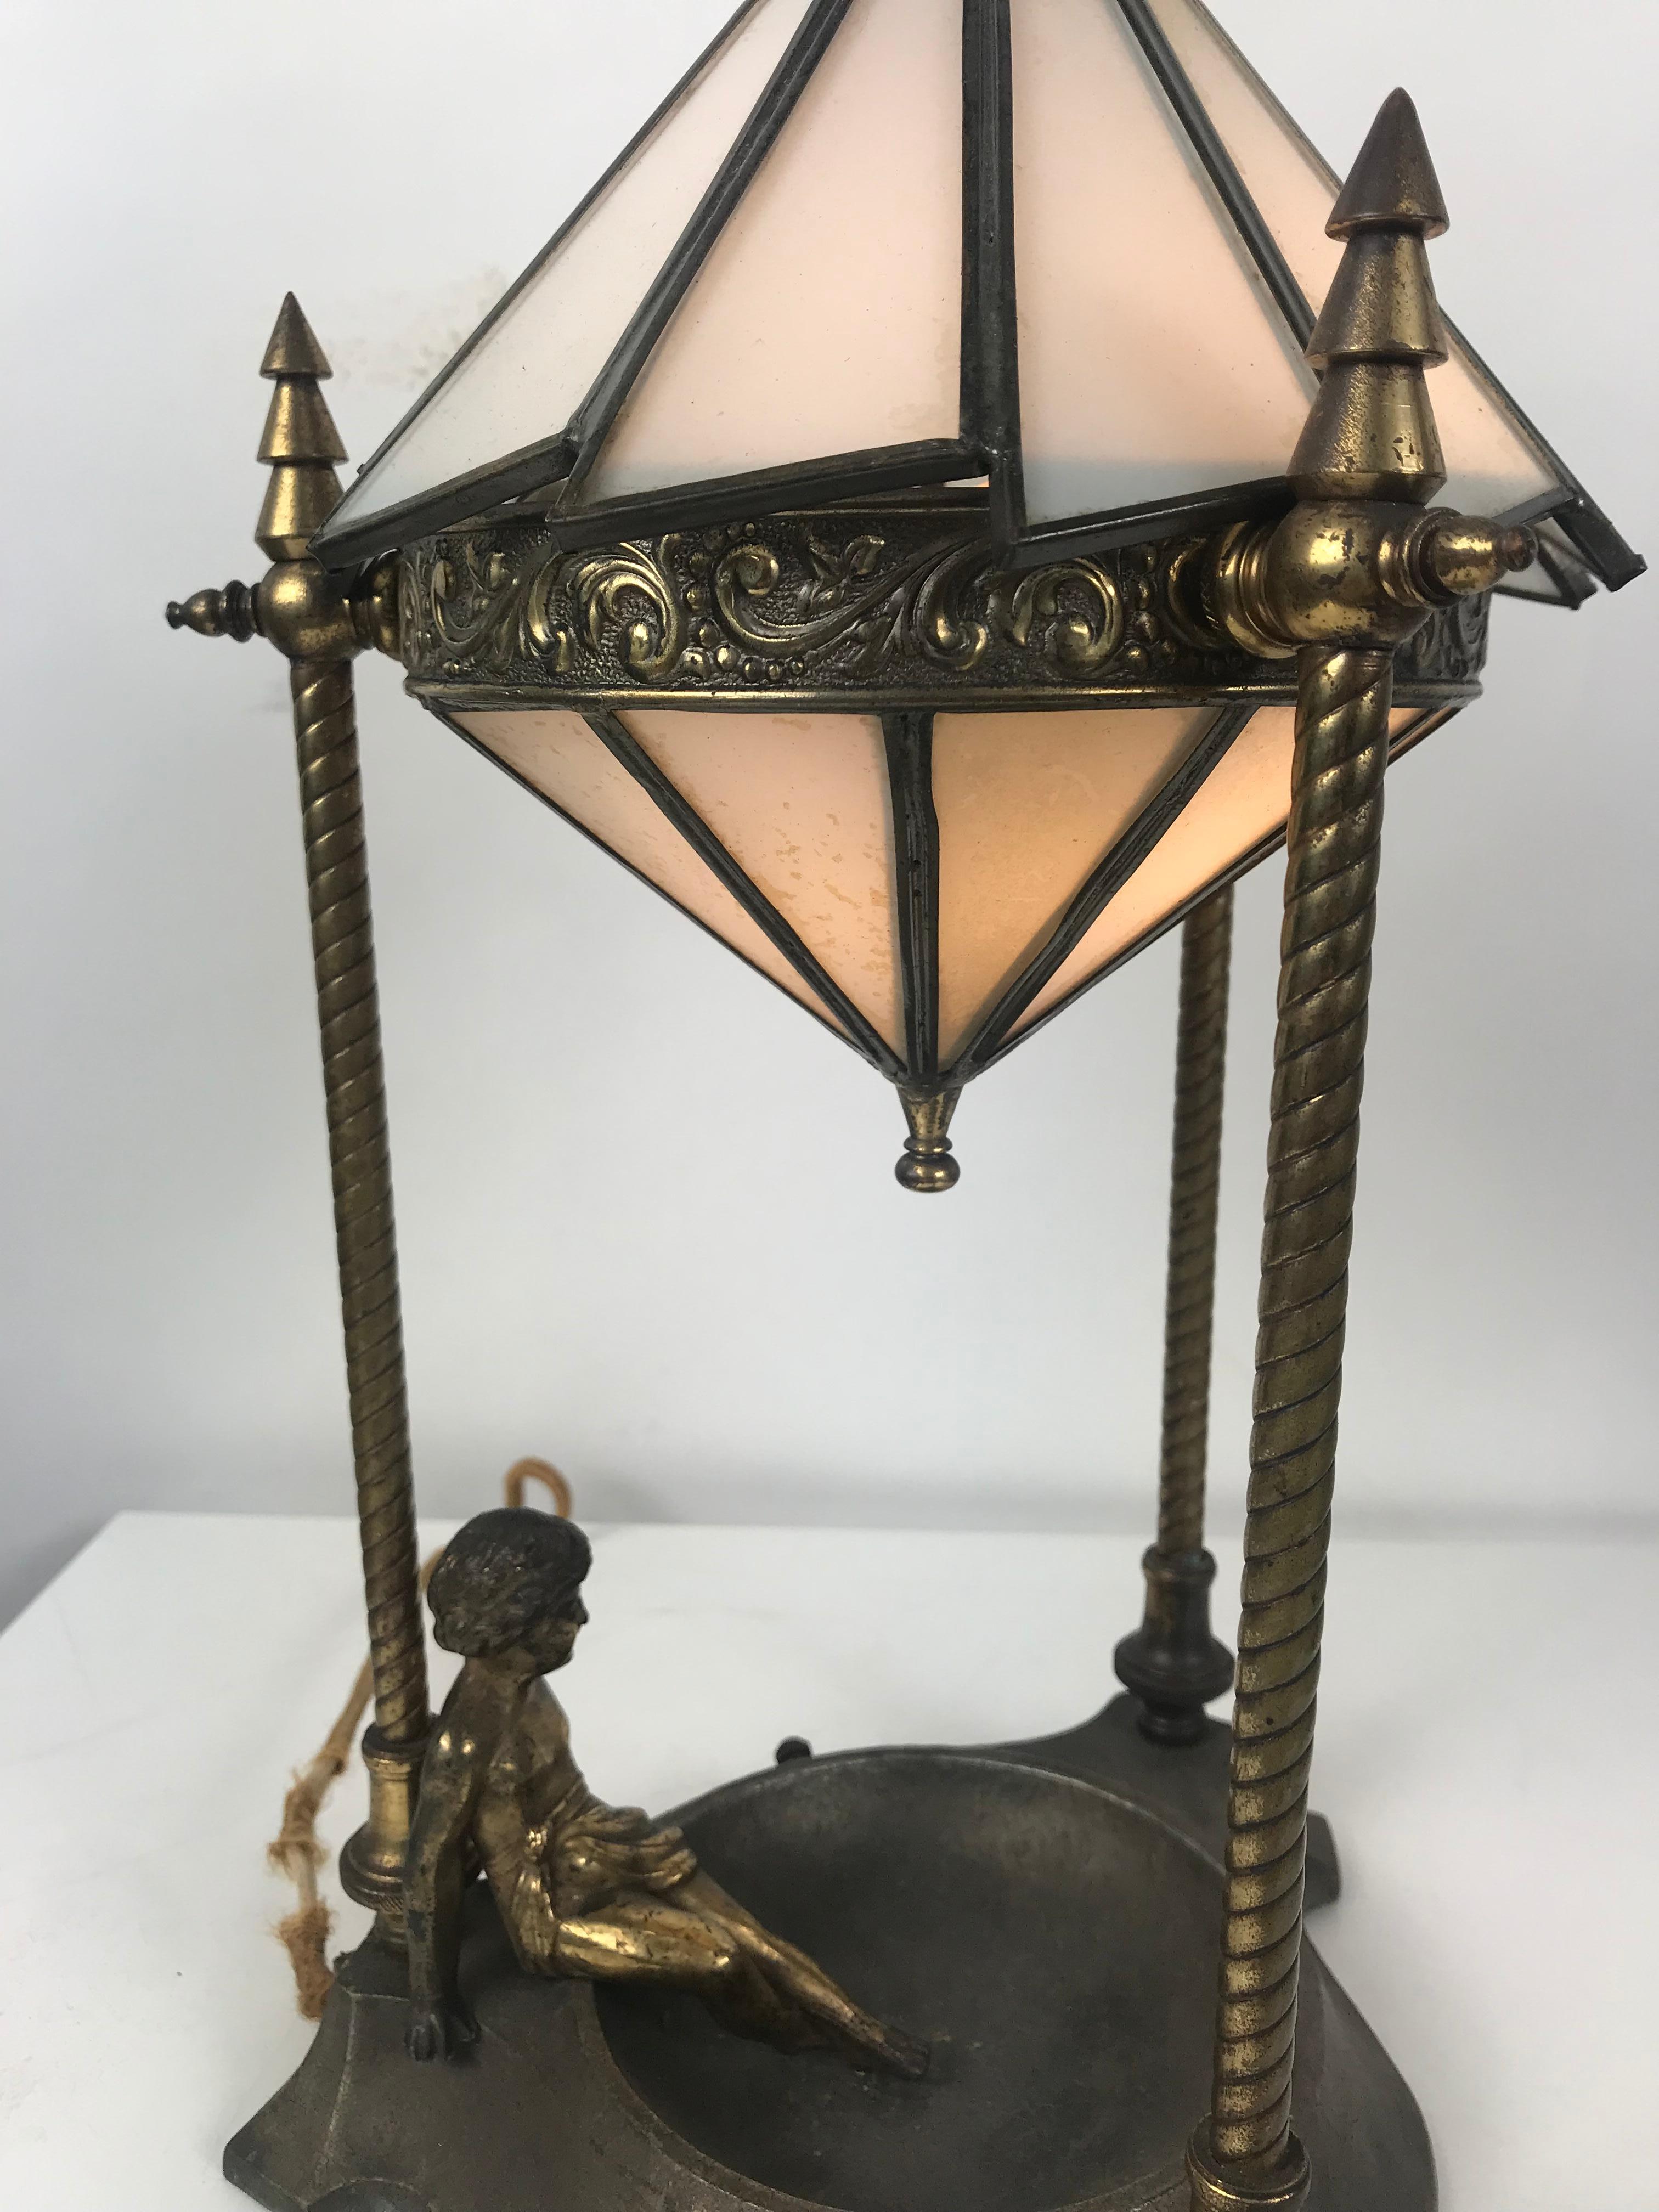 Classic Art Deco Boudoir lamp with stunning ziggurat leaded
slag glass shade, lamp depicting gold gilt sitting angel, super stylized stepped deco finials.